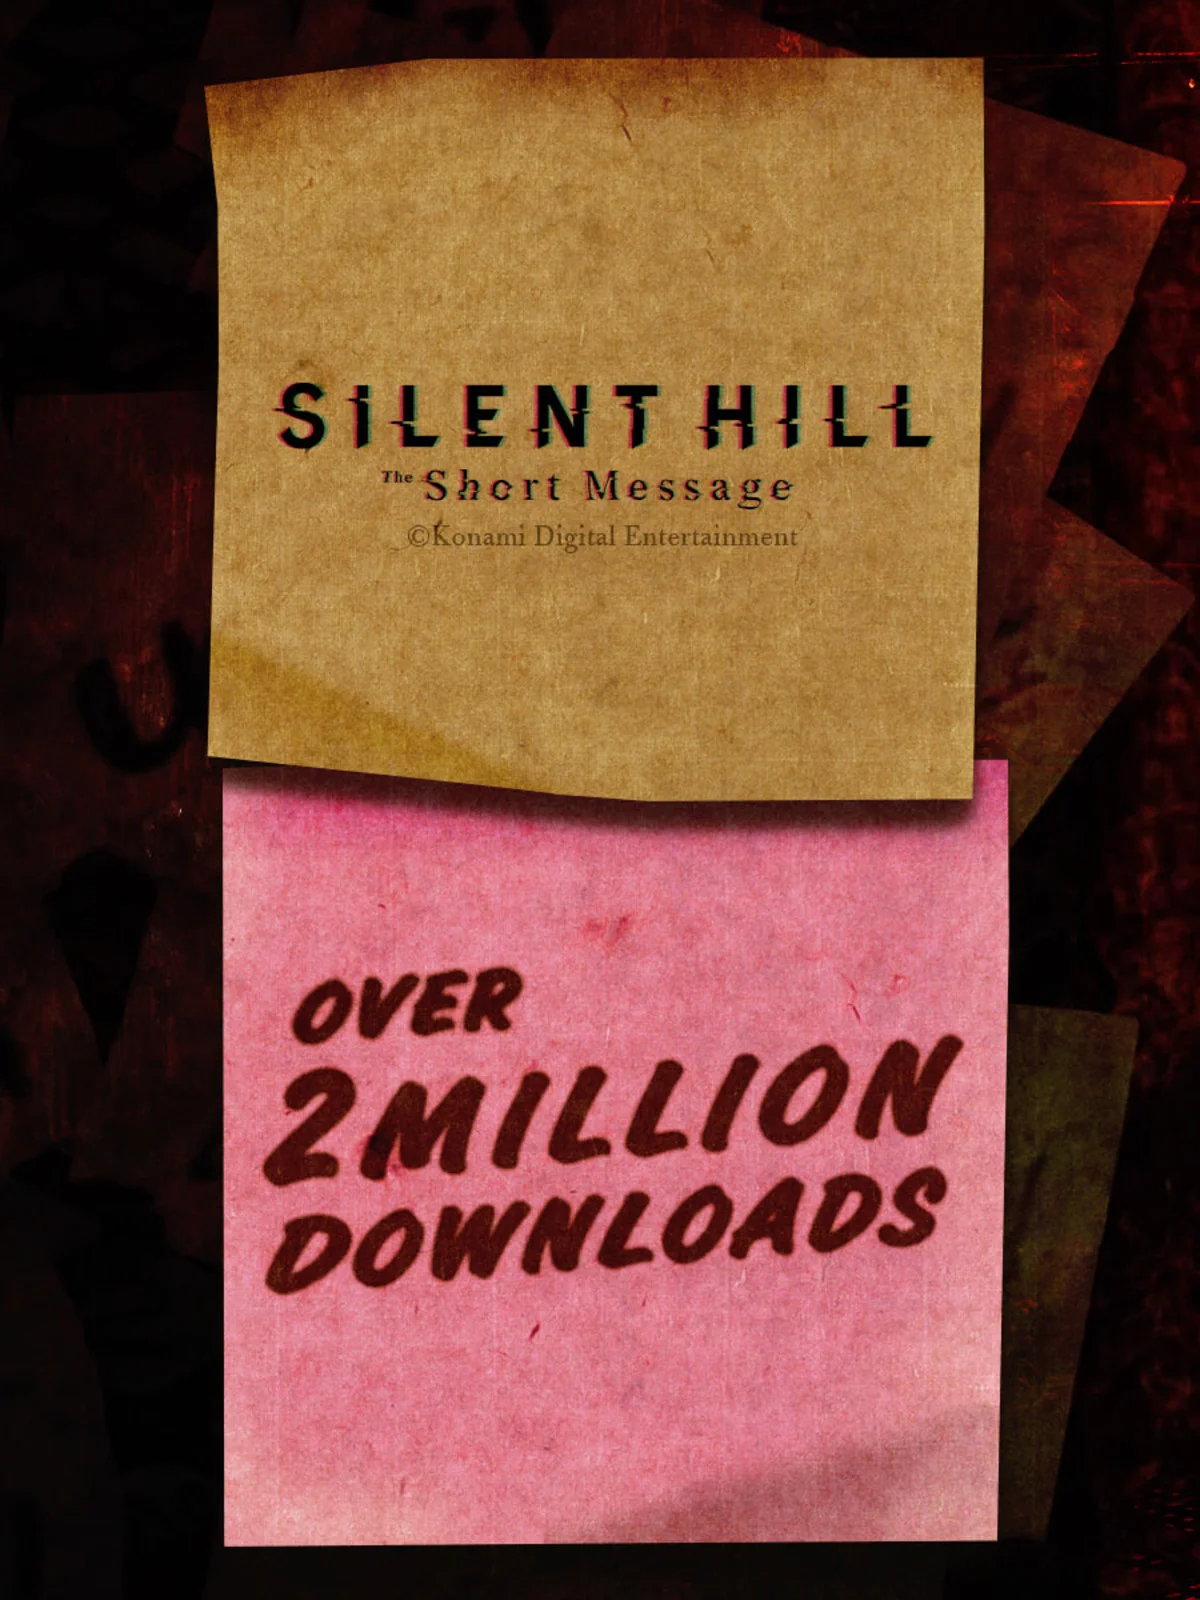 Число загрузок Silent Hill The Short Message перевалило за 2 млн - фото 1